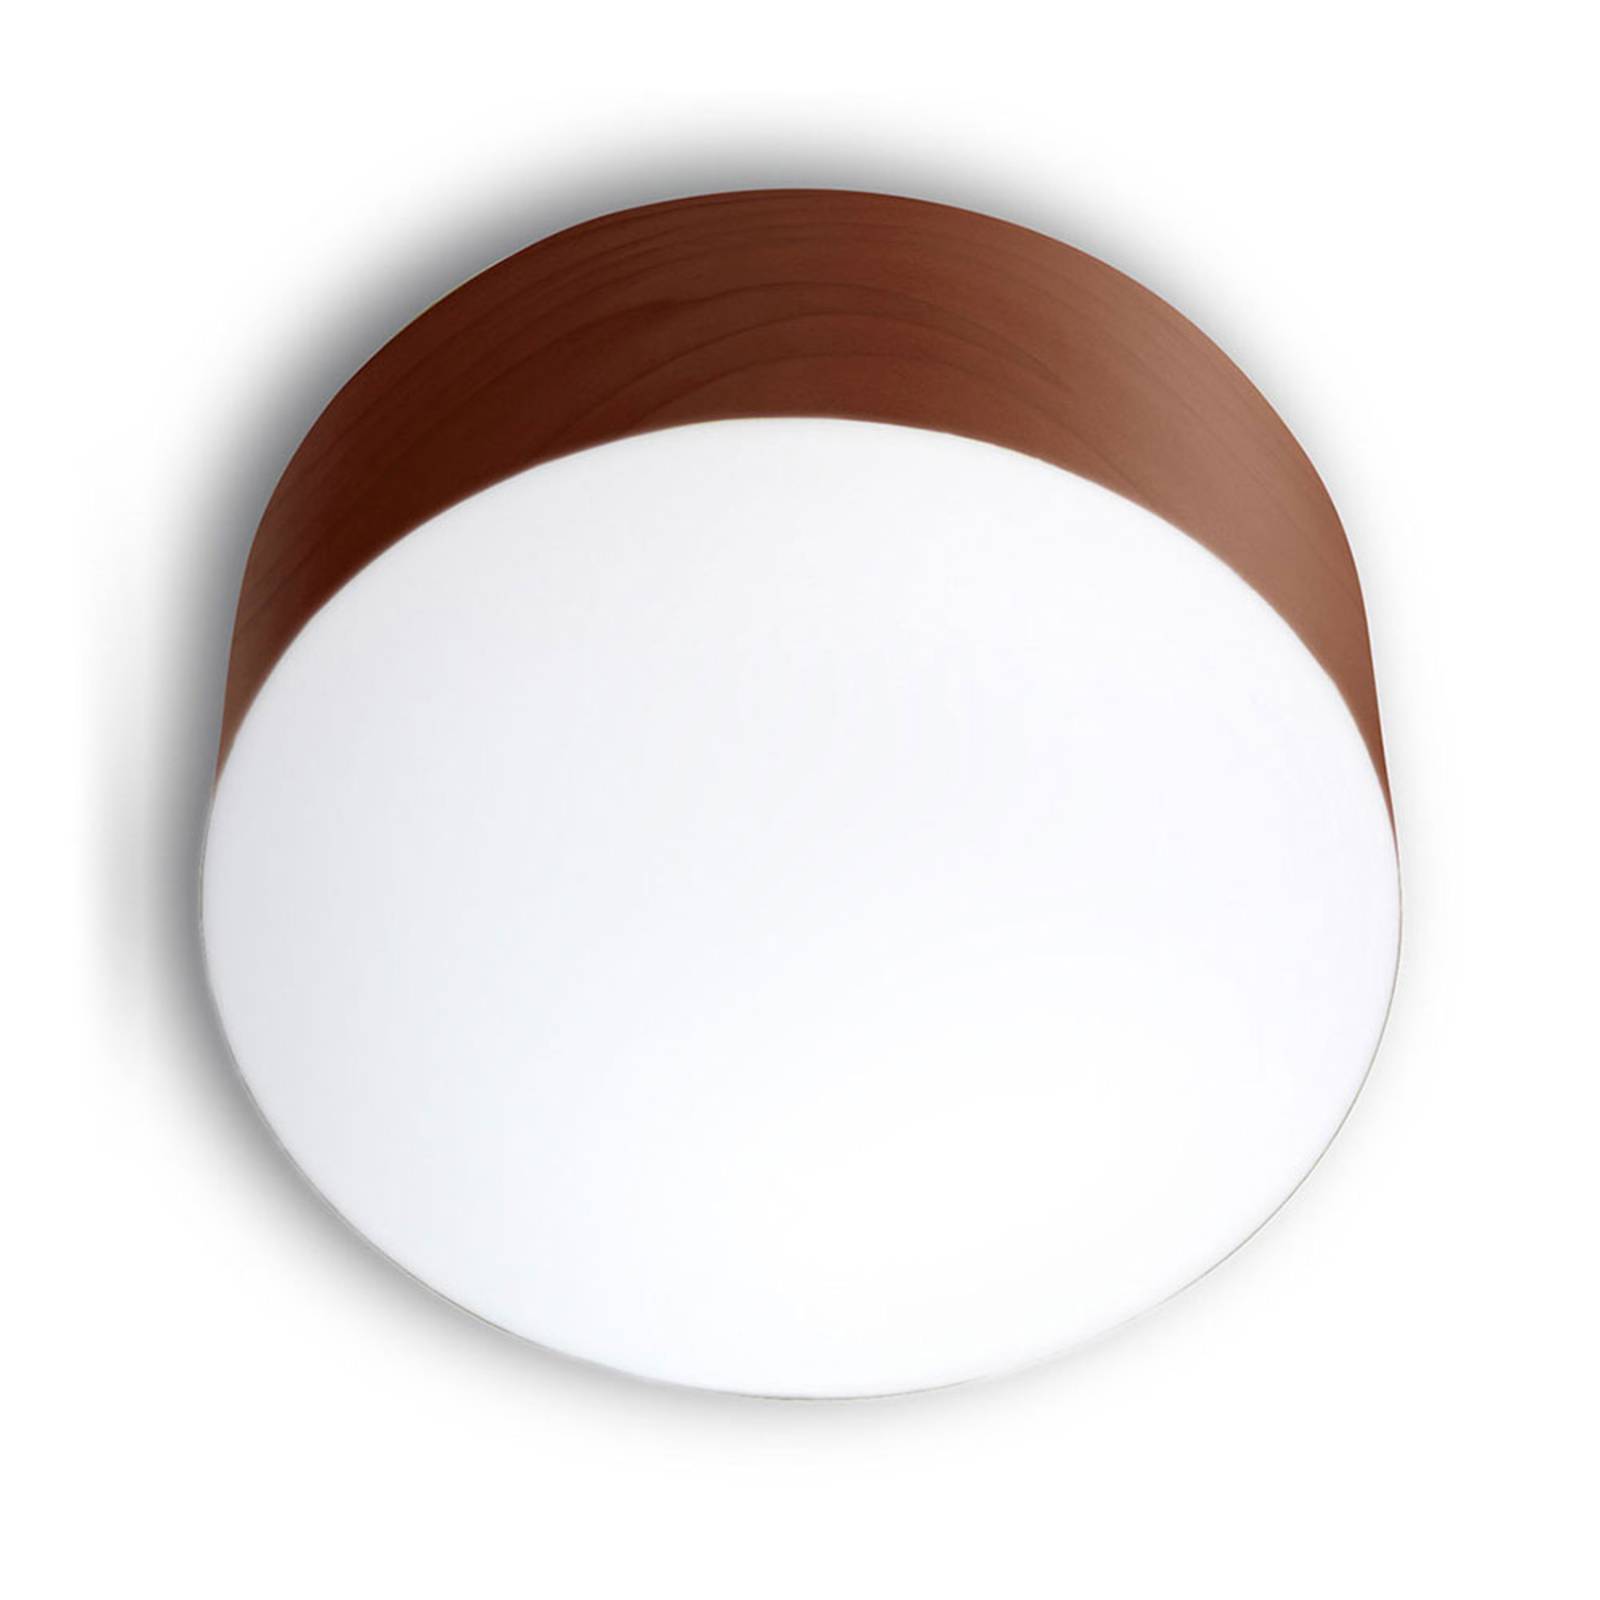 LZF Gea taklampe 0-10V dim Ø 20cm sjokolade